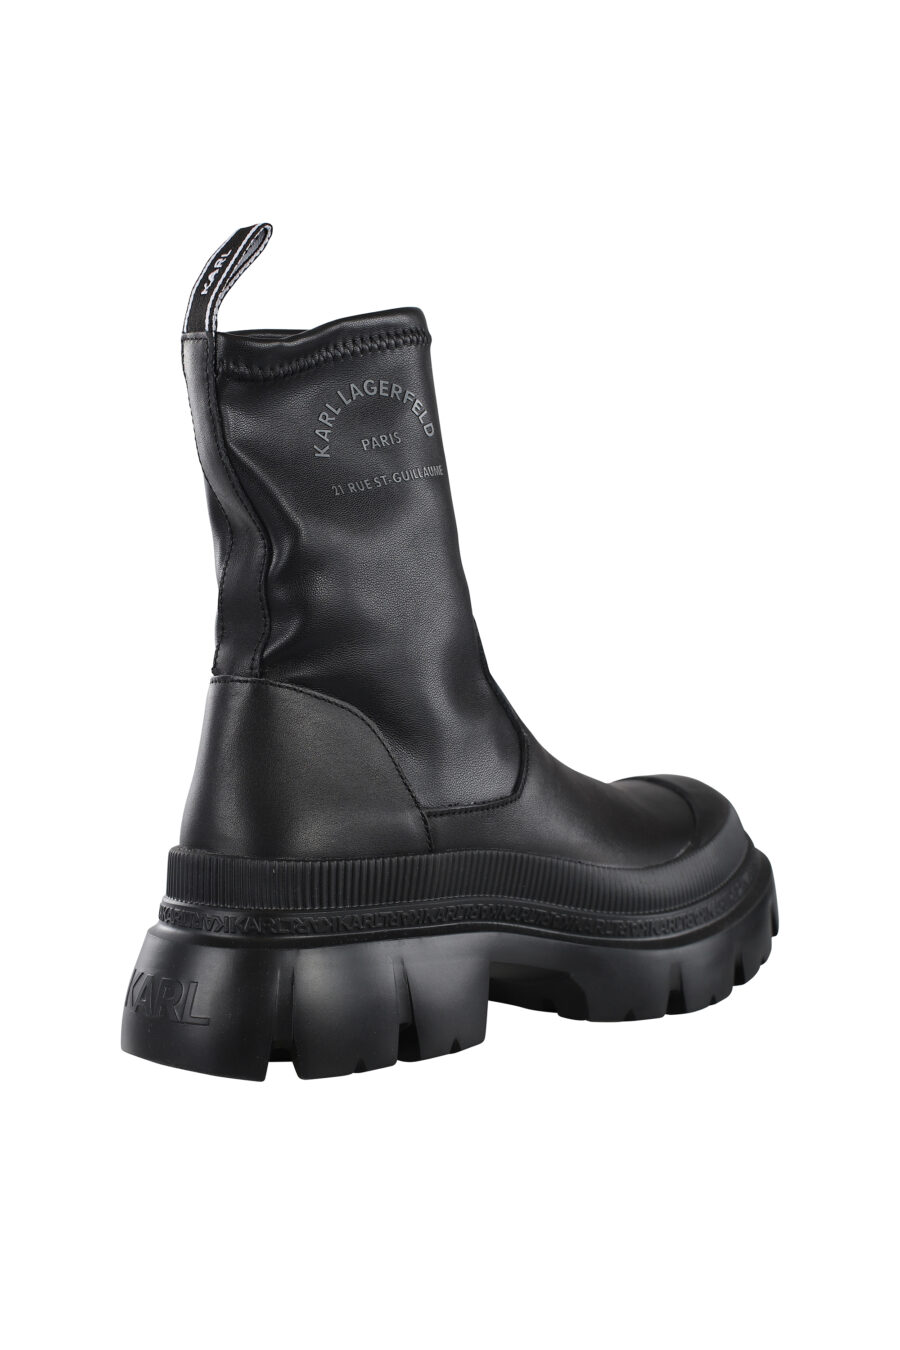 Schwarze Ankle Boots mit schwarzer Plateausohle - IMG 7144